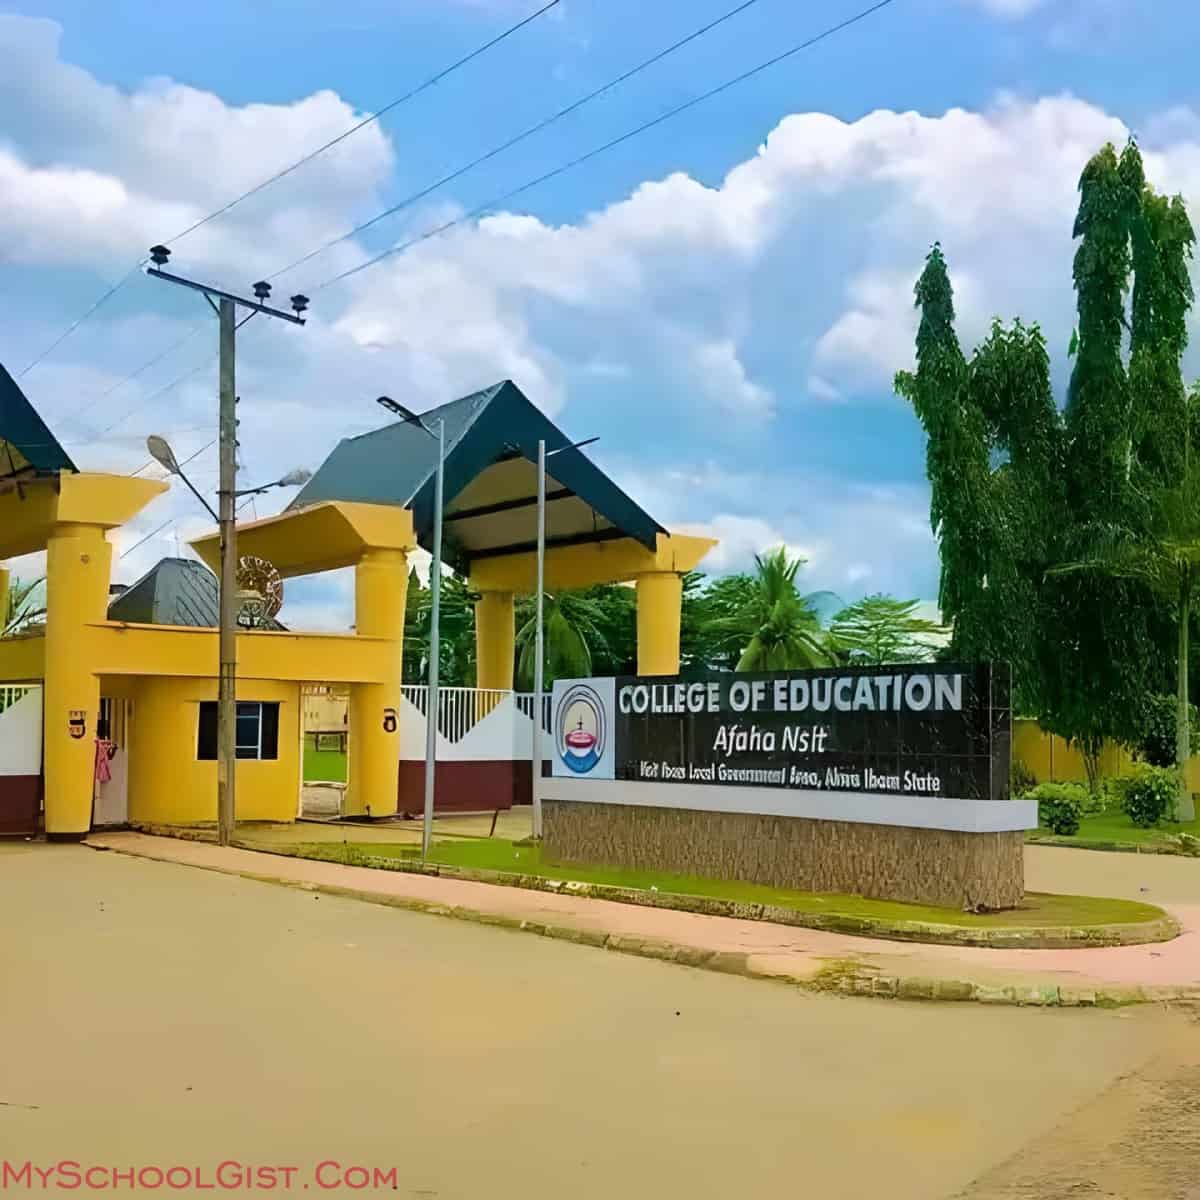 Akwa Ibom State Polytechnic (AKWAIBOMPOLY) HND Admission List